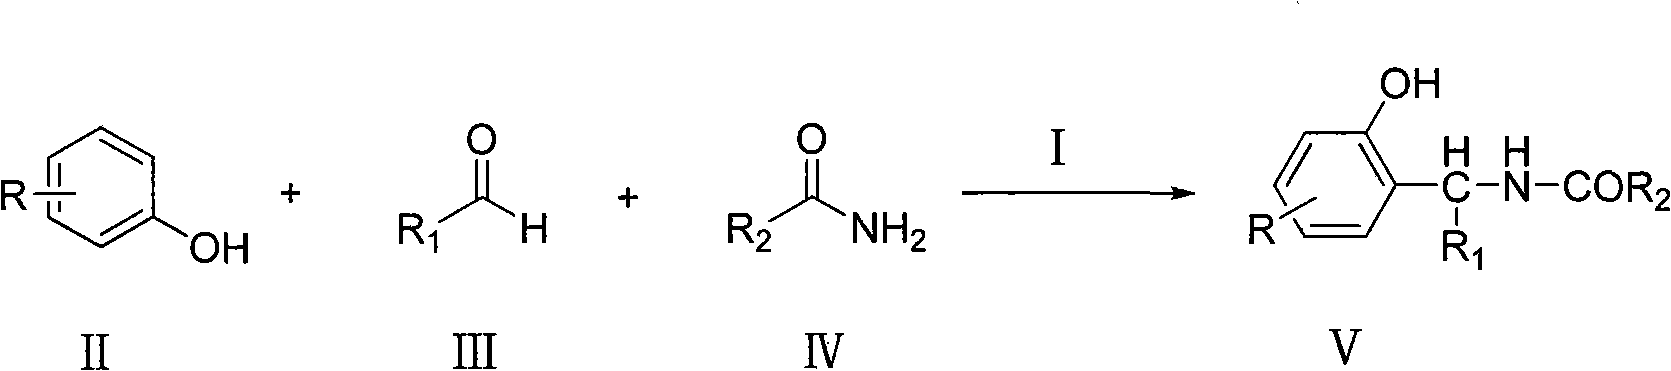 L-proline trifluoromethanesulfonic acid ammonium salt and application thereof